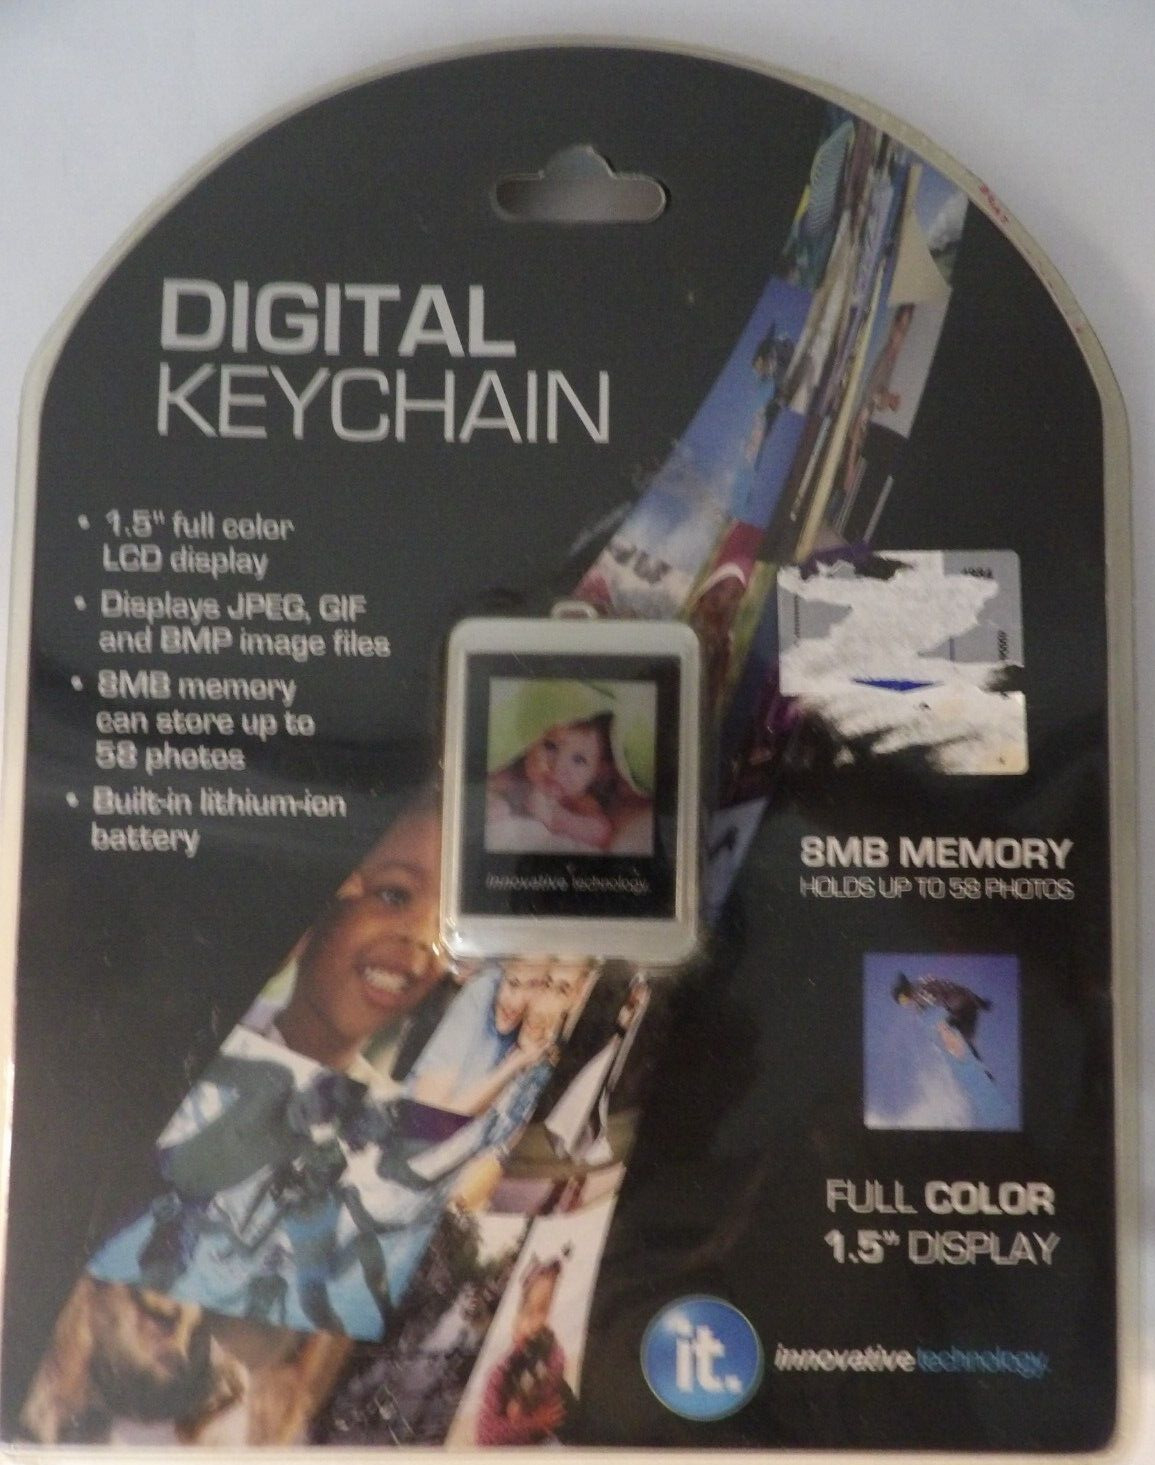 Innovative Technology Digital Keychain 1.5” Color Display 8MB Memory 58 Photos